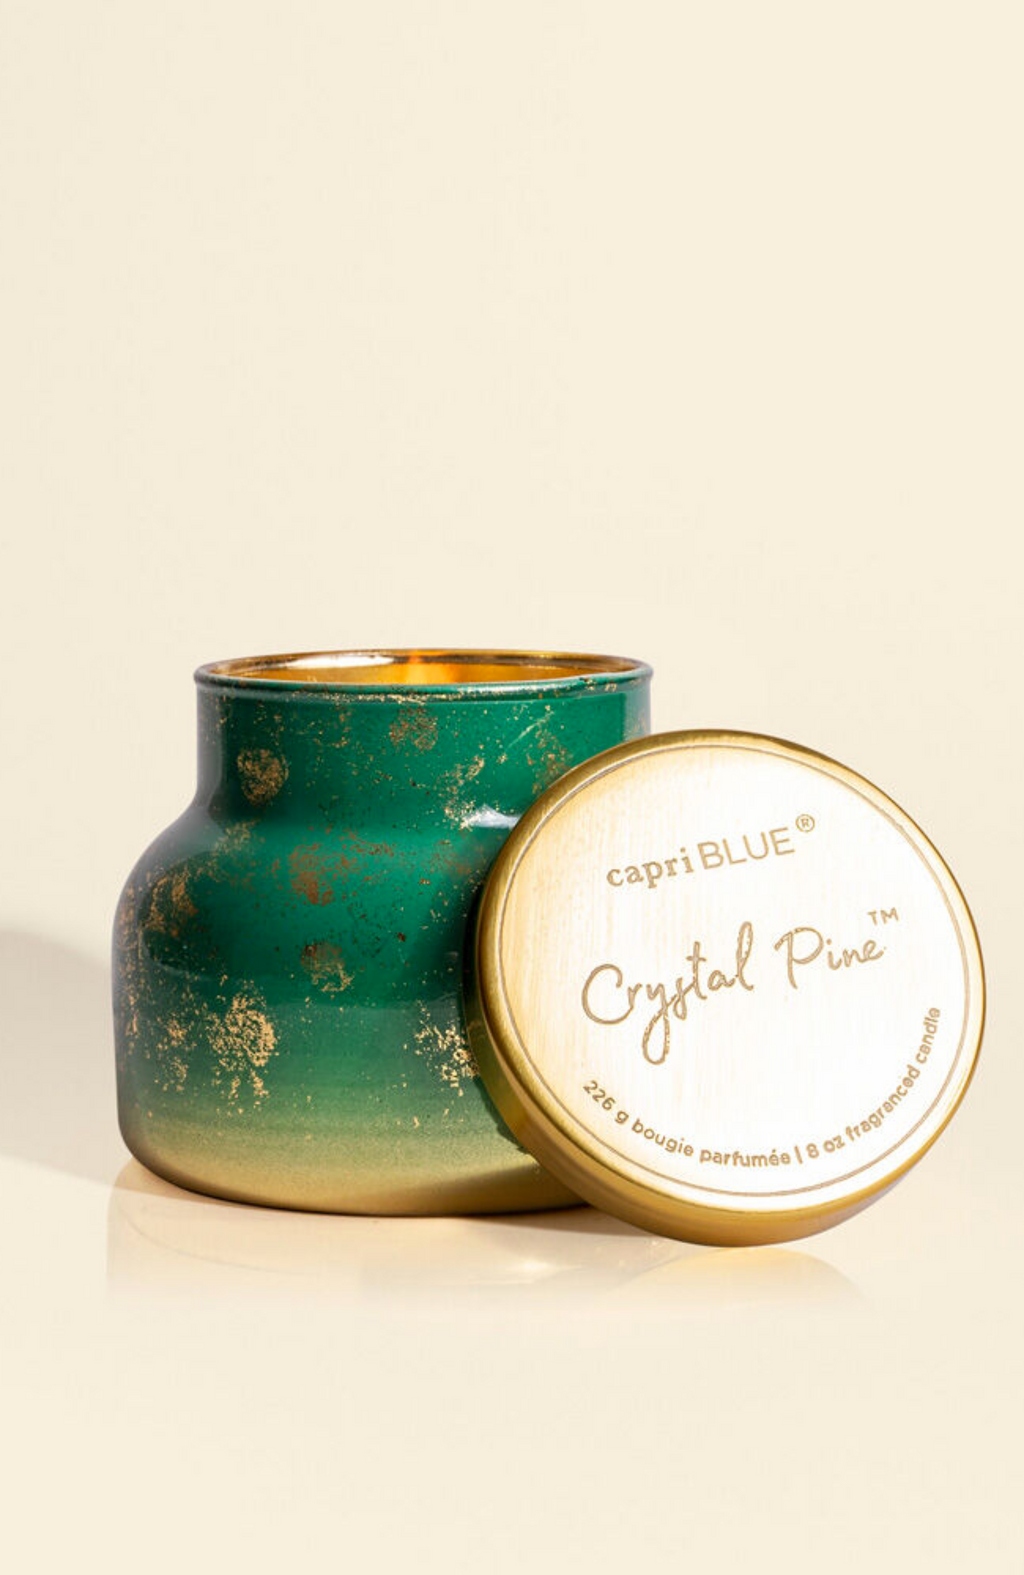 Capri Blue - Crystal Pine Glimmer Petite Jar